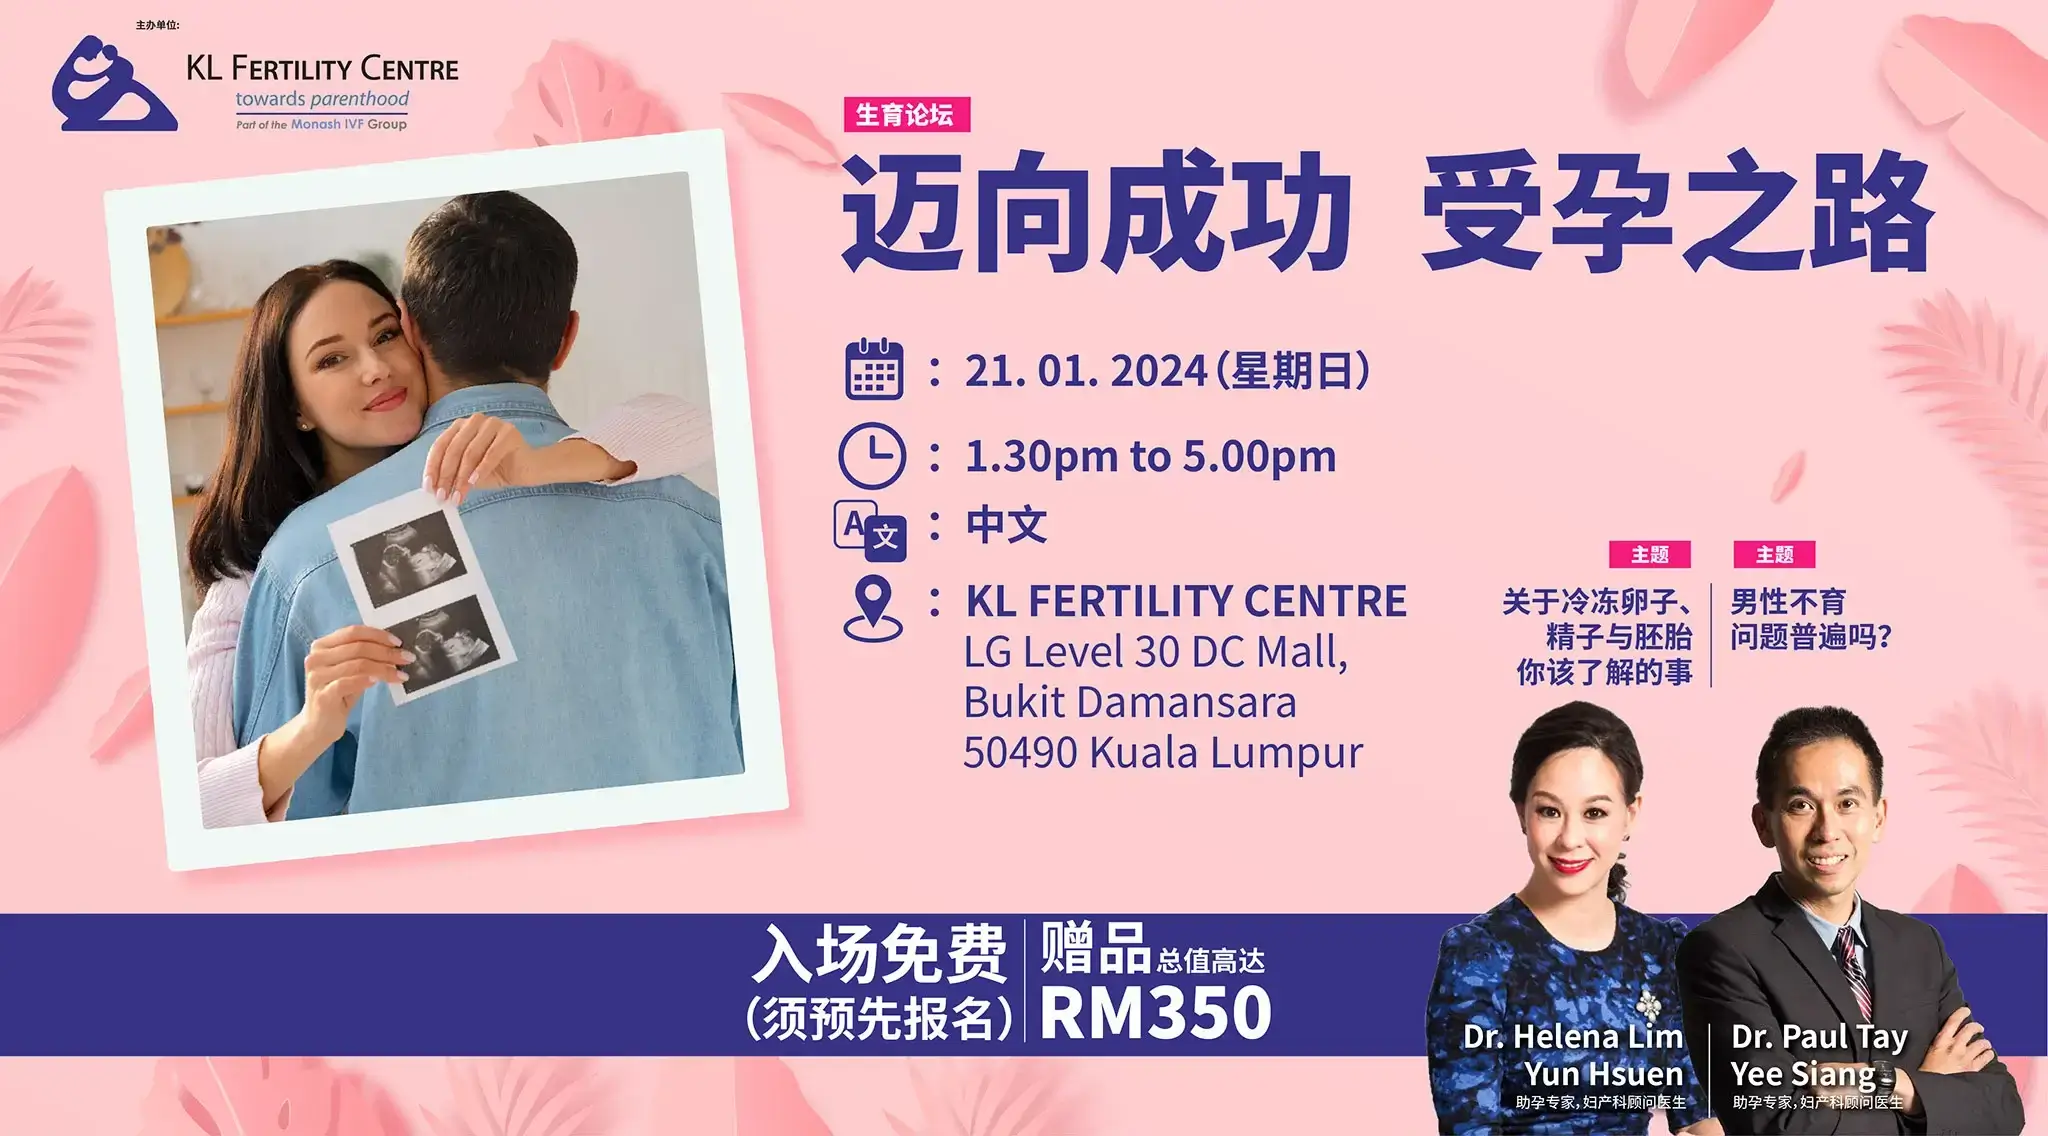 Fertility Forum January 21, 2024 - Dr. Helena Lim, Dr. Paul Tay